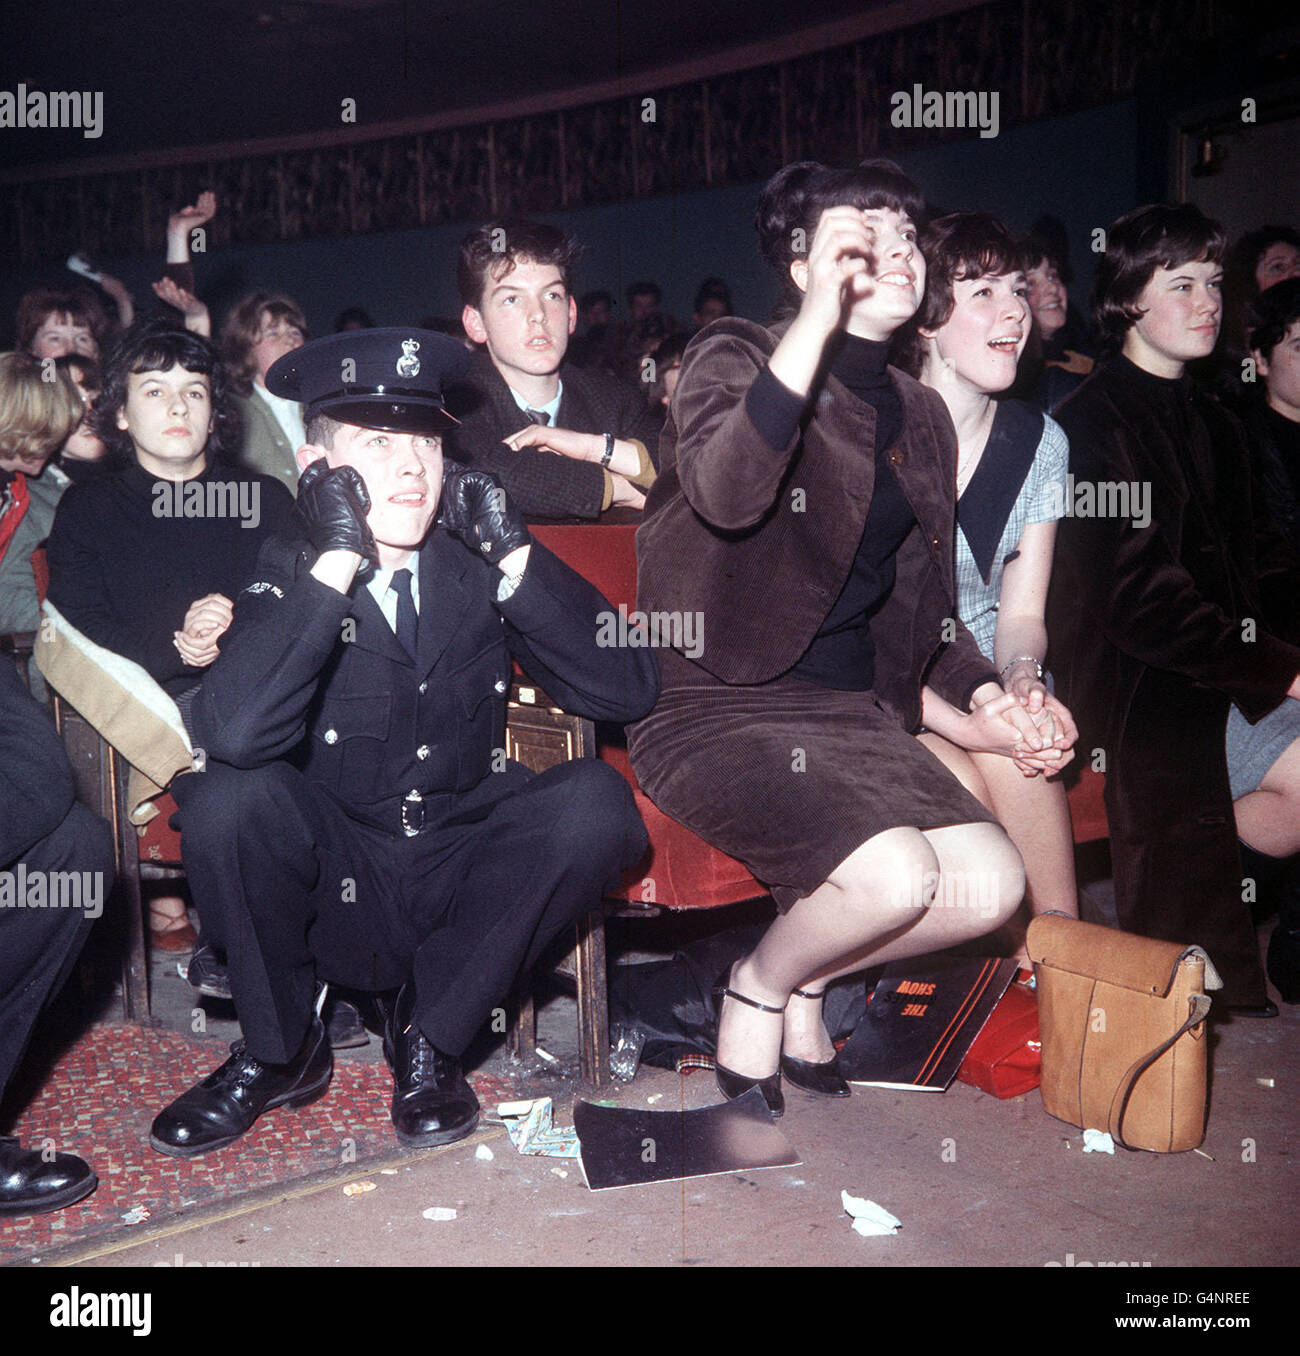 Beatles fans/Manchester 1963 Stock Photo